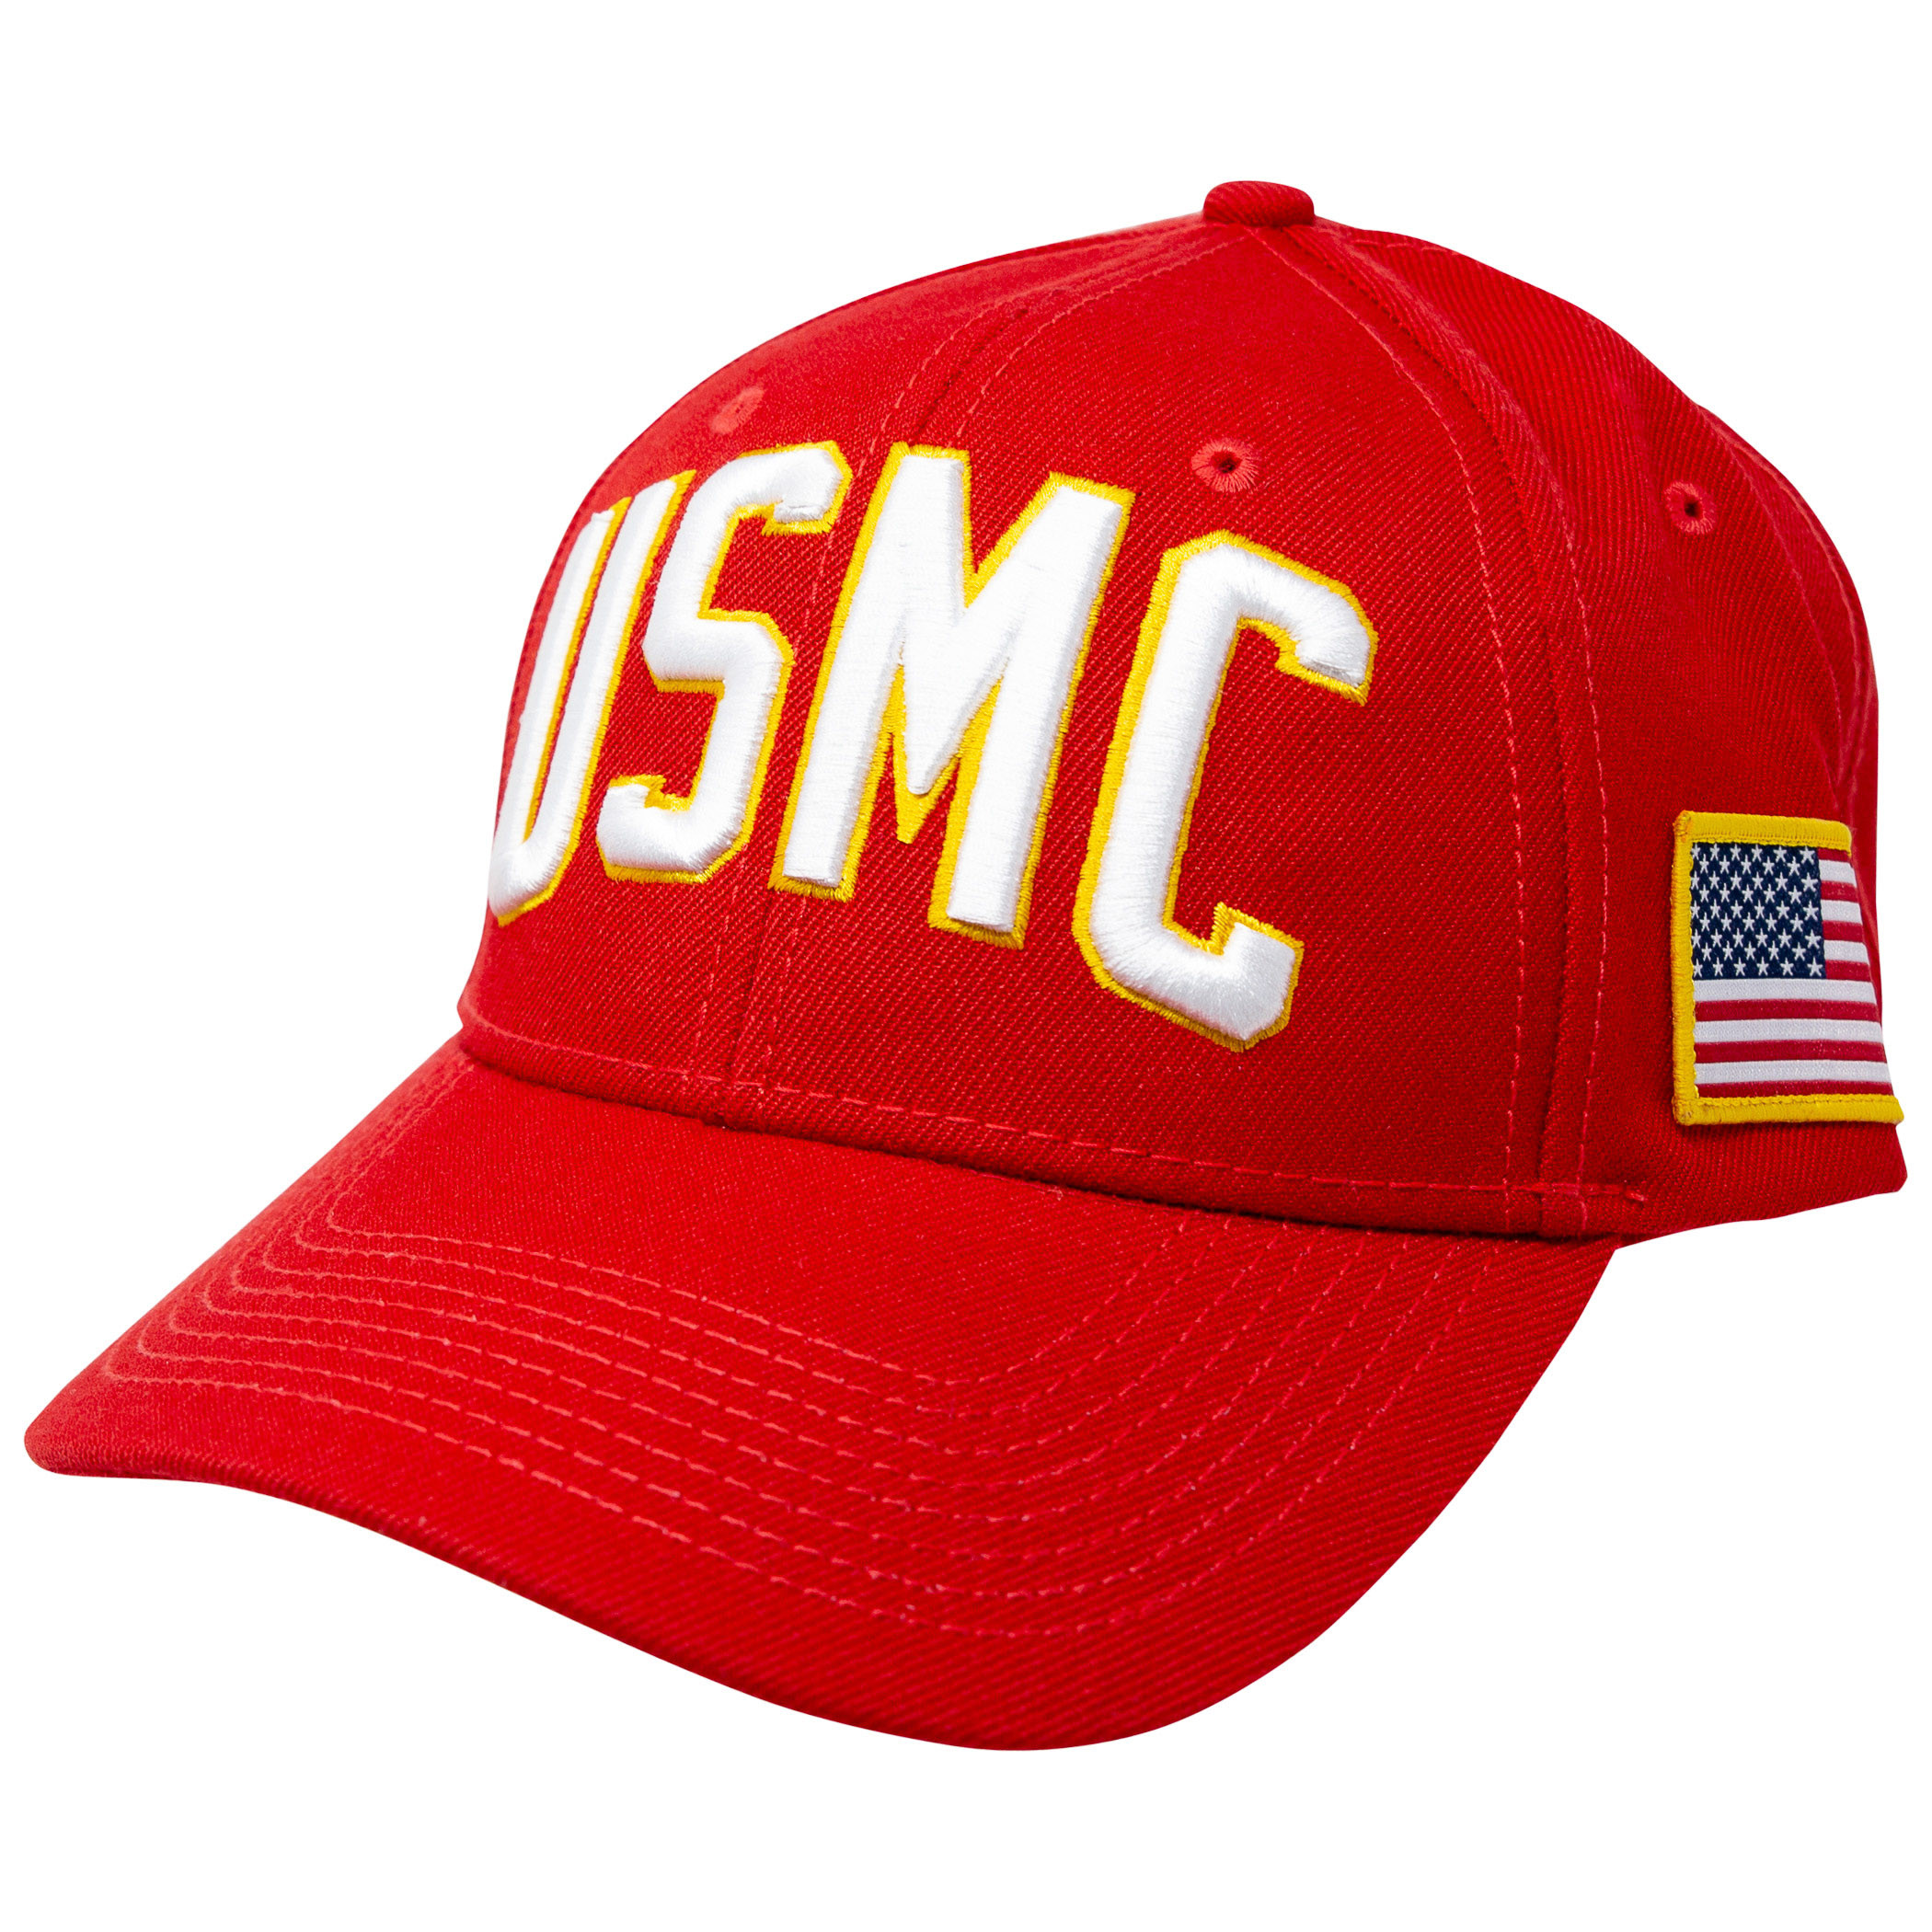 USMC Adjustable Red Snapback Hat - image 1 of 5